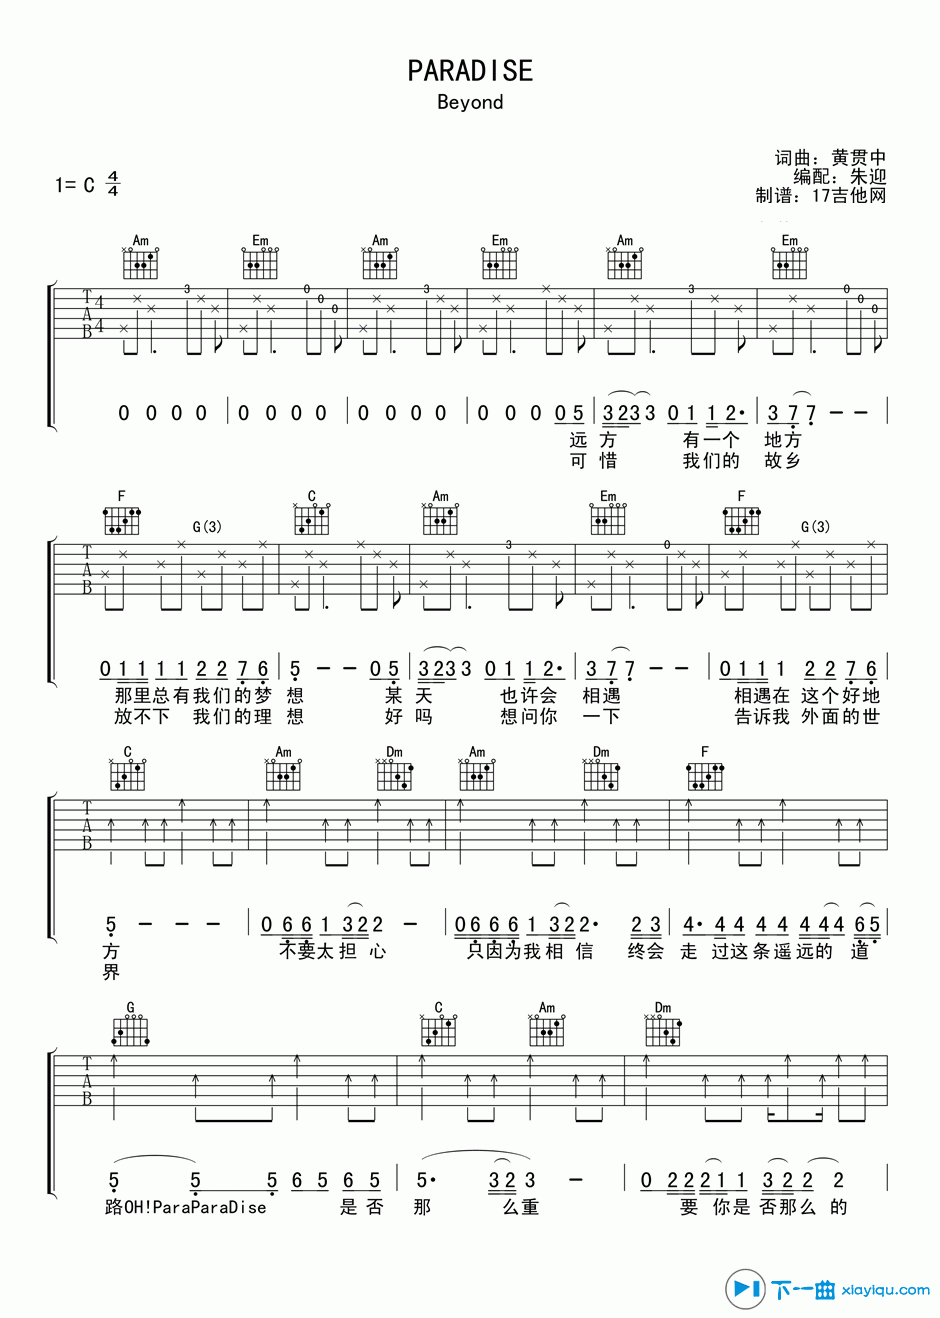 paradise吉他谱,原版Beyond歌曲,简单C调弹唱教学,17吉他版六线指弹简谱图